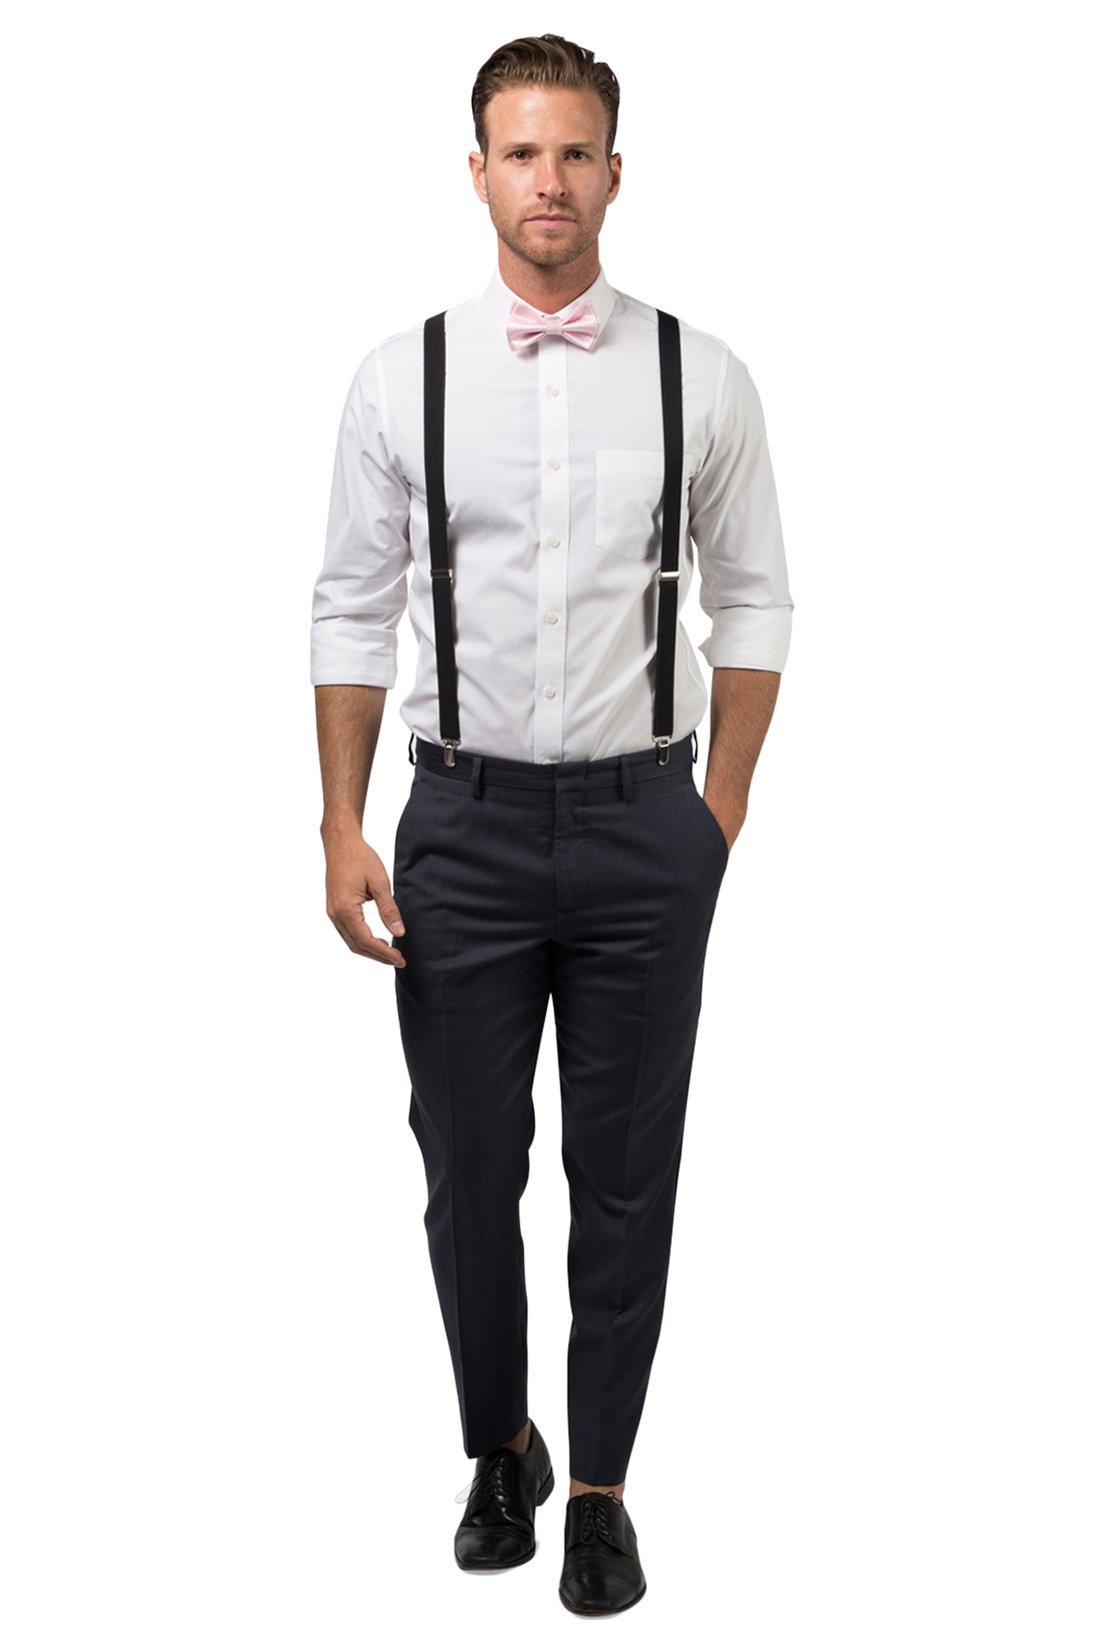 1 Clips Red Colored Men's Suspenders for men 110cm Women's pants X With  adjustable Elastic Trouser Braces Straps grey